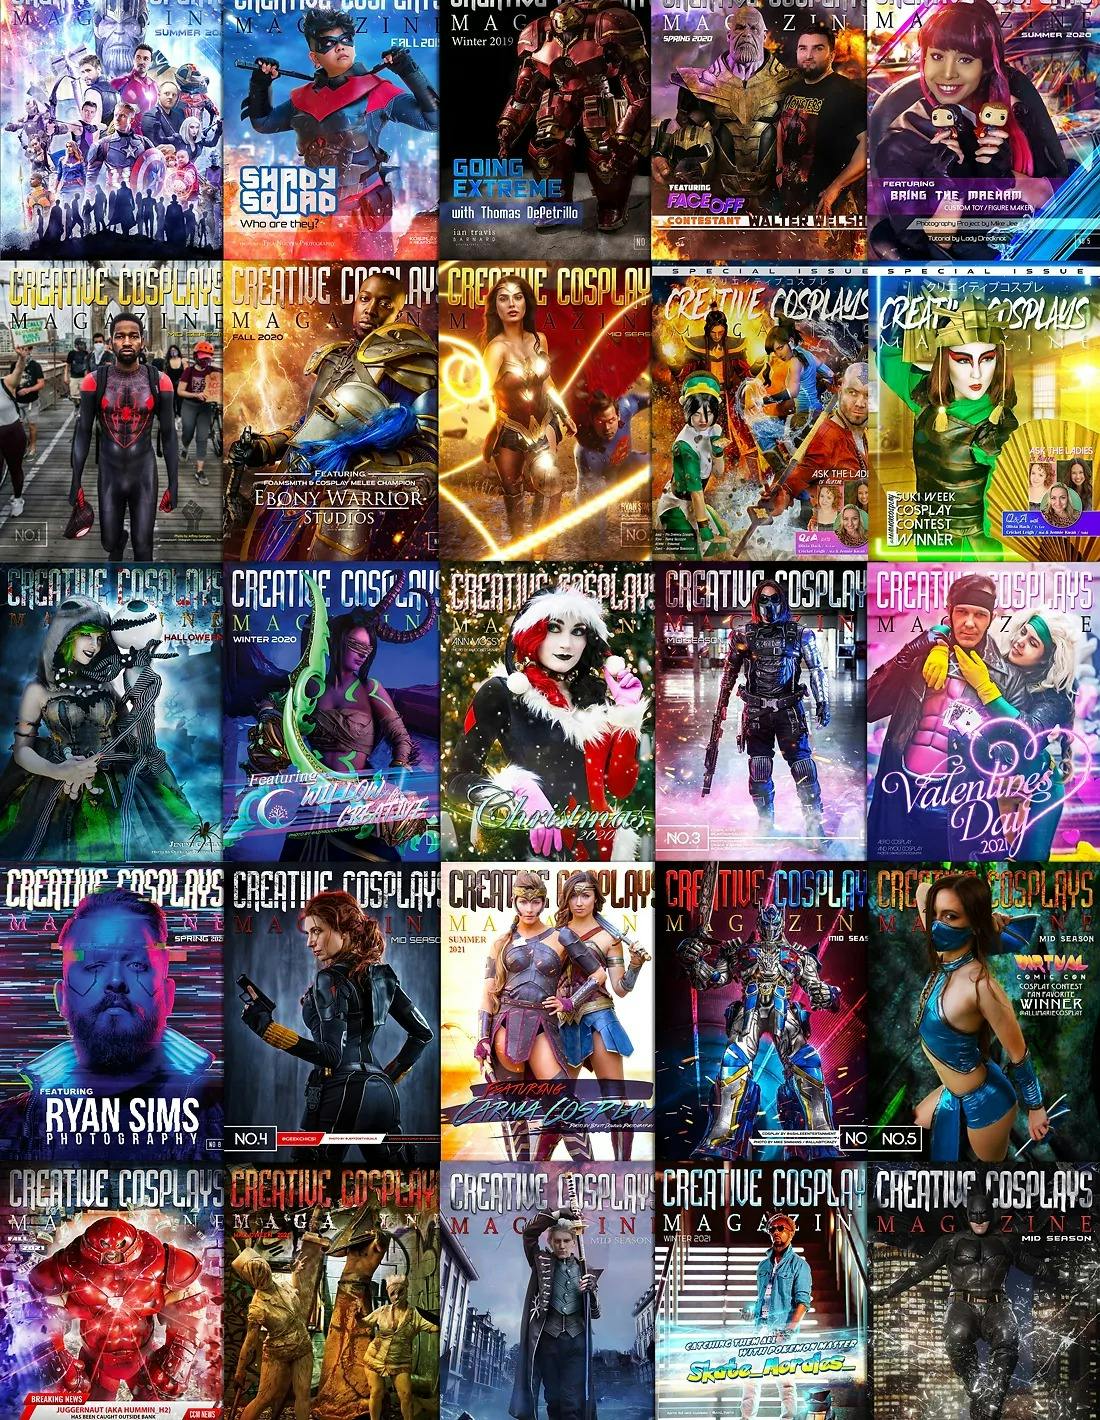 Creative Cosplays Magazine covers